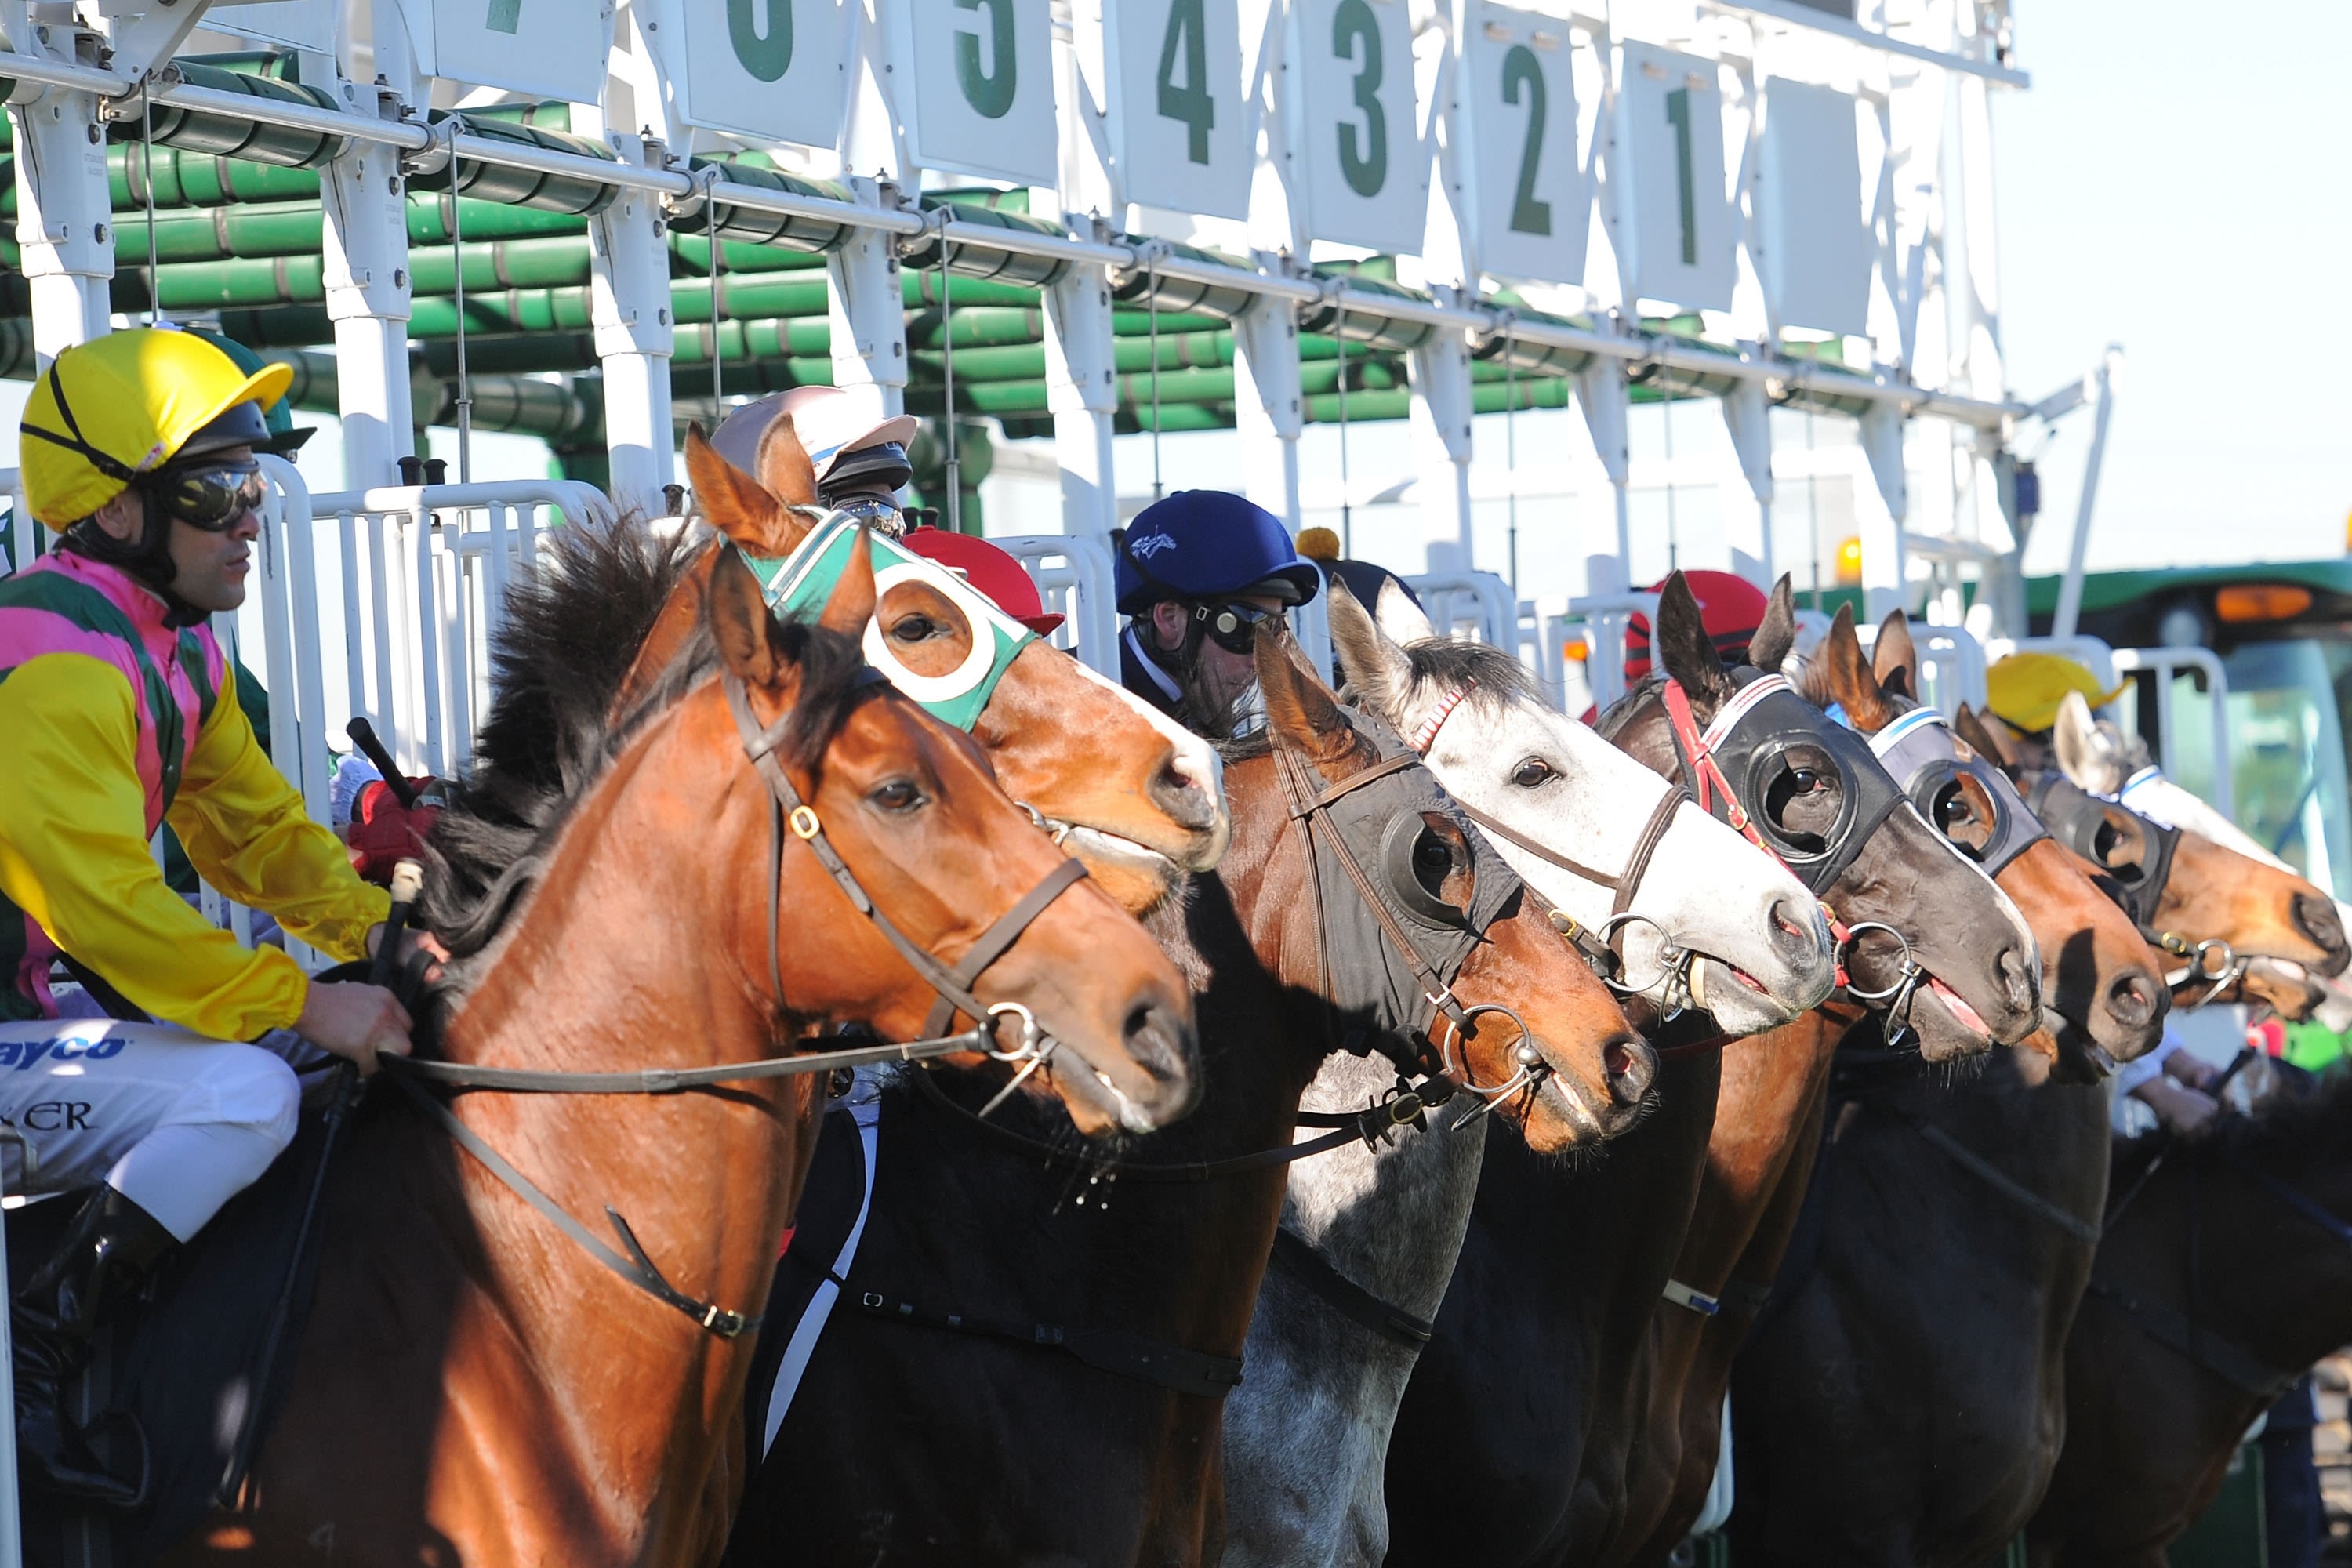 Wwwhorsesex - Horse racing's battle of the sexes -- does gender matter? | CNN